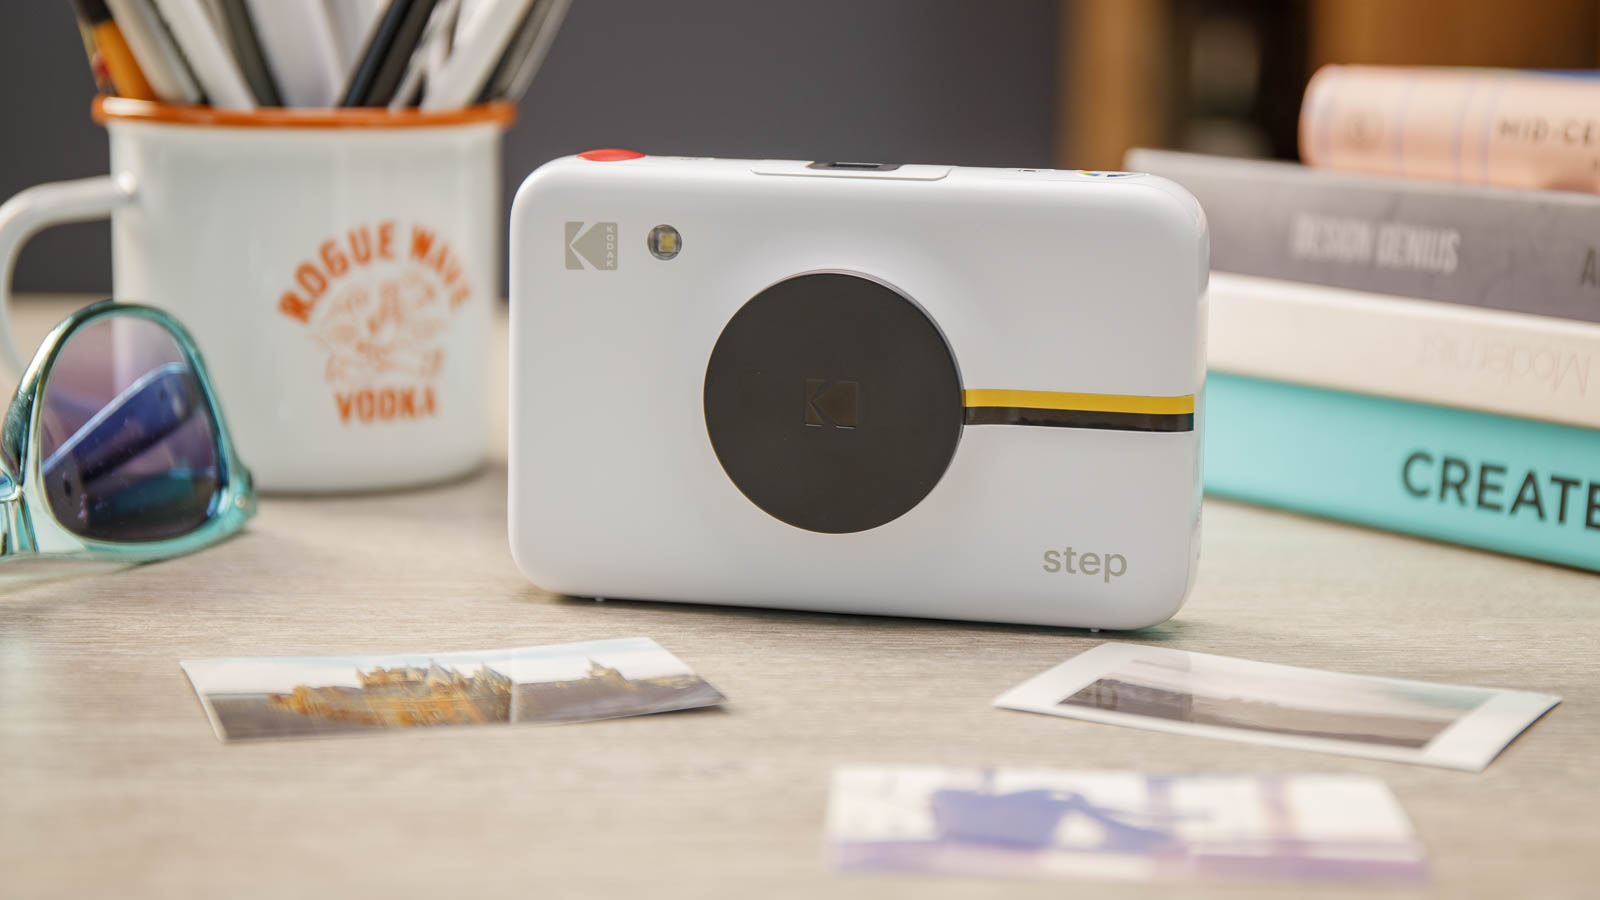 Cámara instantánea Kodak Step con la tapa del objetivo puesta